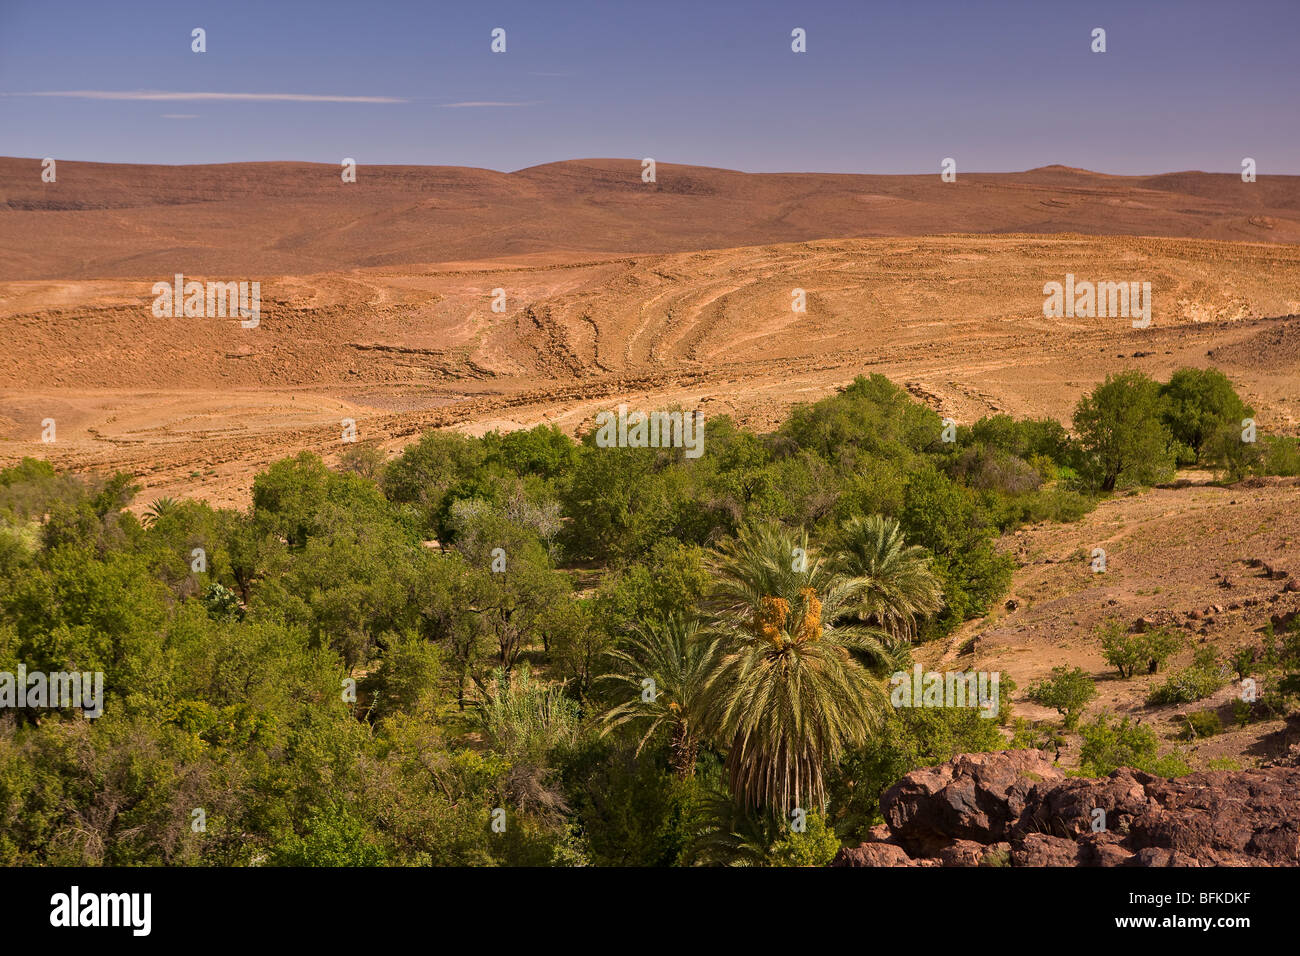 AIT SAOEN, MOROCCO - Atlas mountain landscape with palm trees near Ait Saoen. Stock Photo